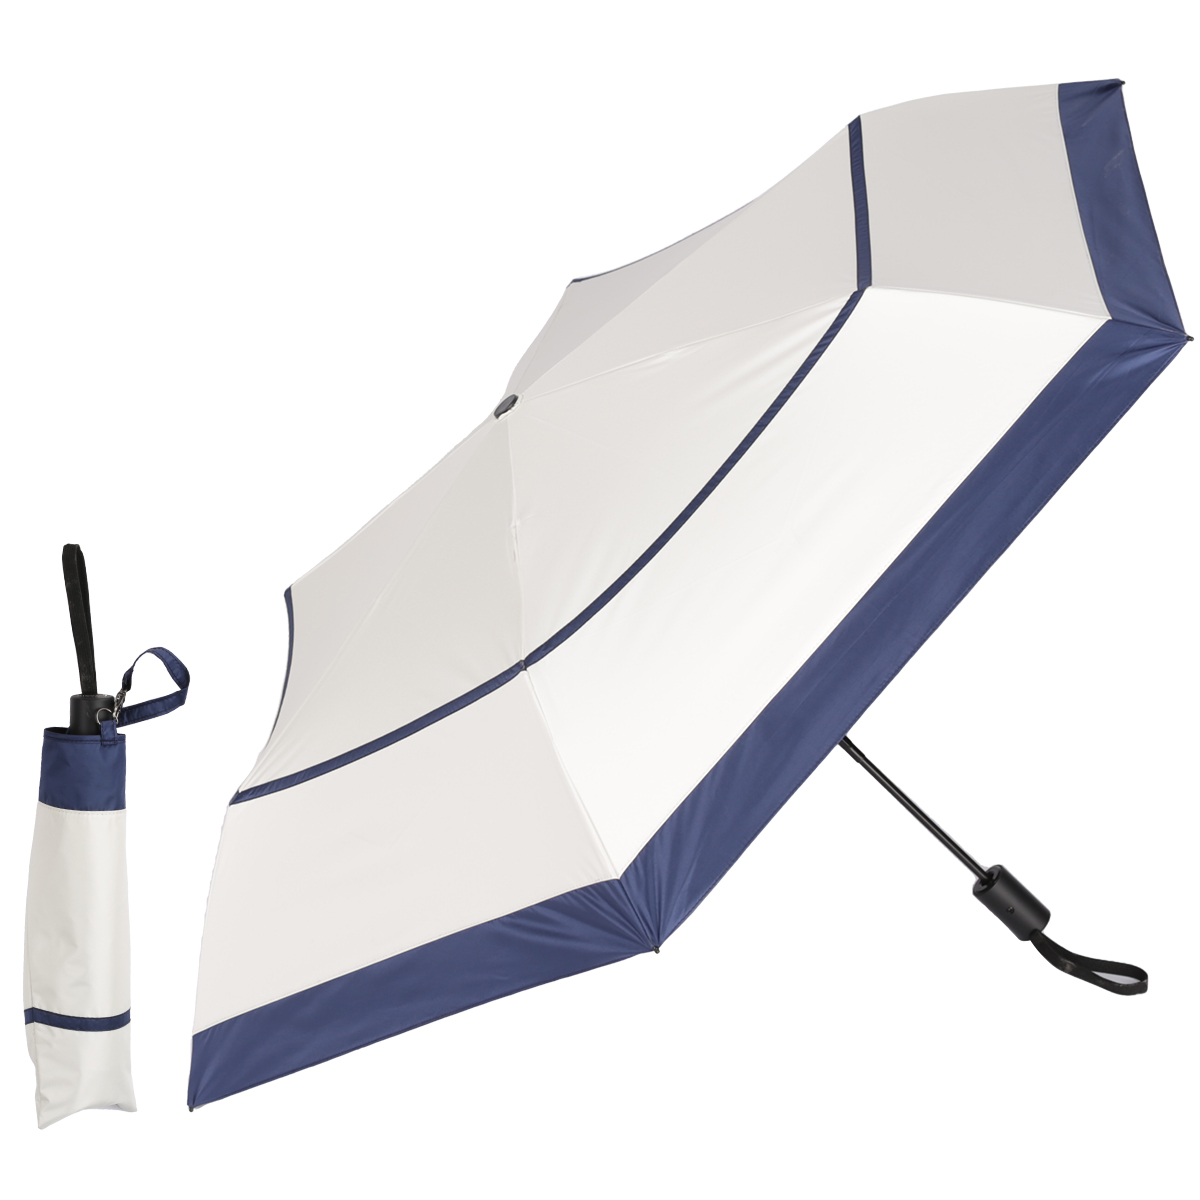 P５倍／日傘 完全遮光 折りたたみ傘 自動開閉 超軽量カーボン傘 234g 